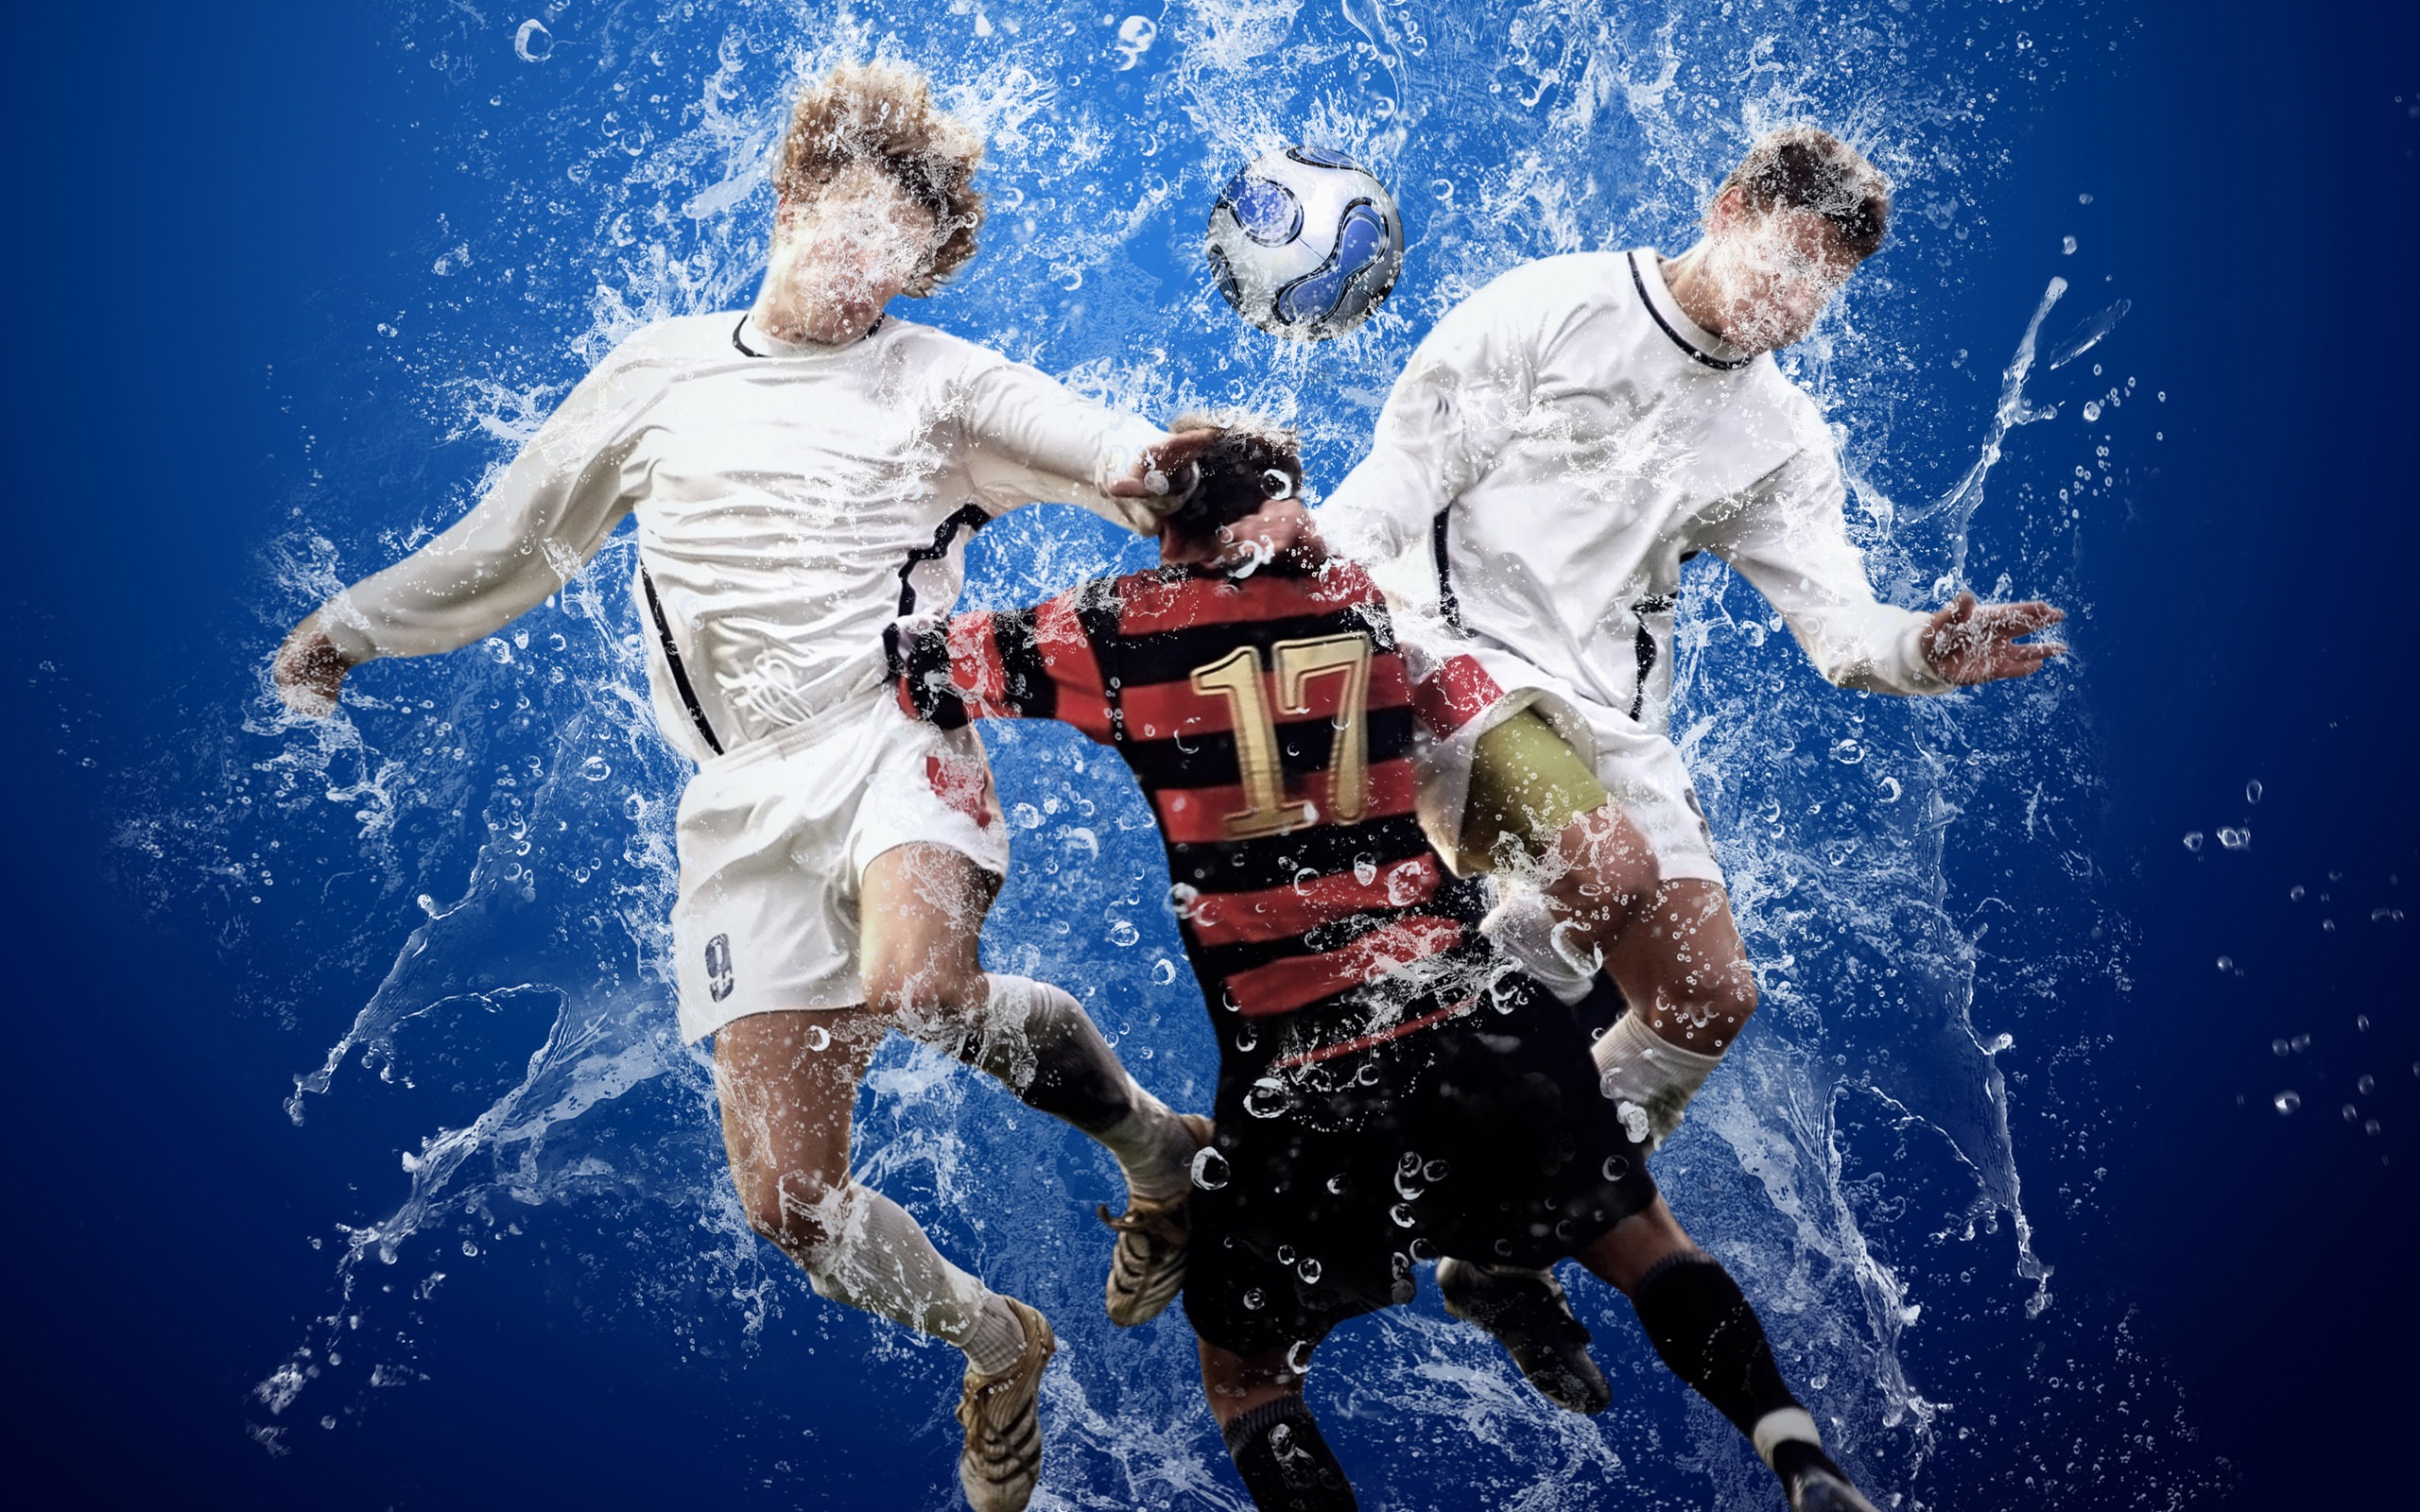 Super Soccer photo wallpaper (2) #2 - 2560x1600